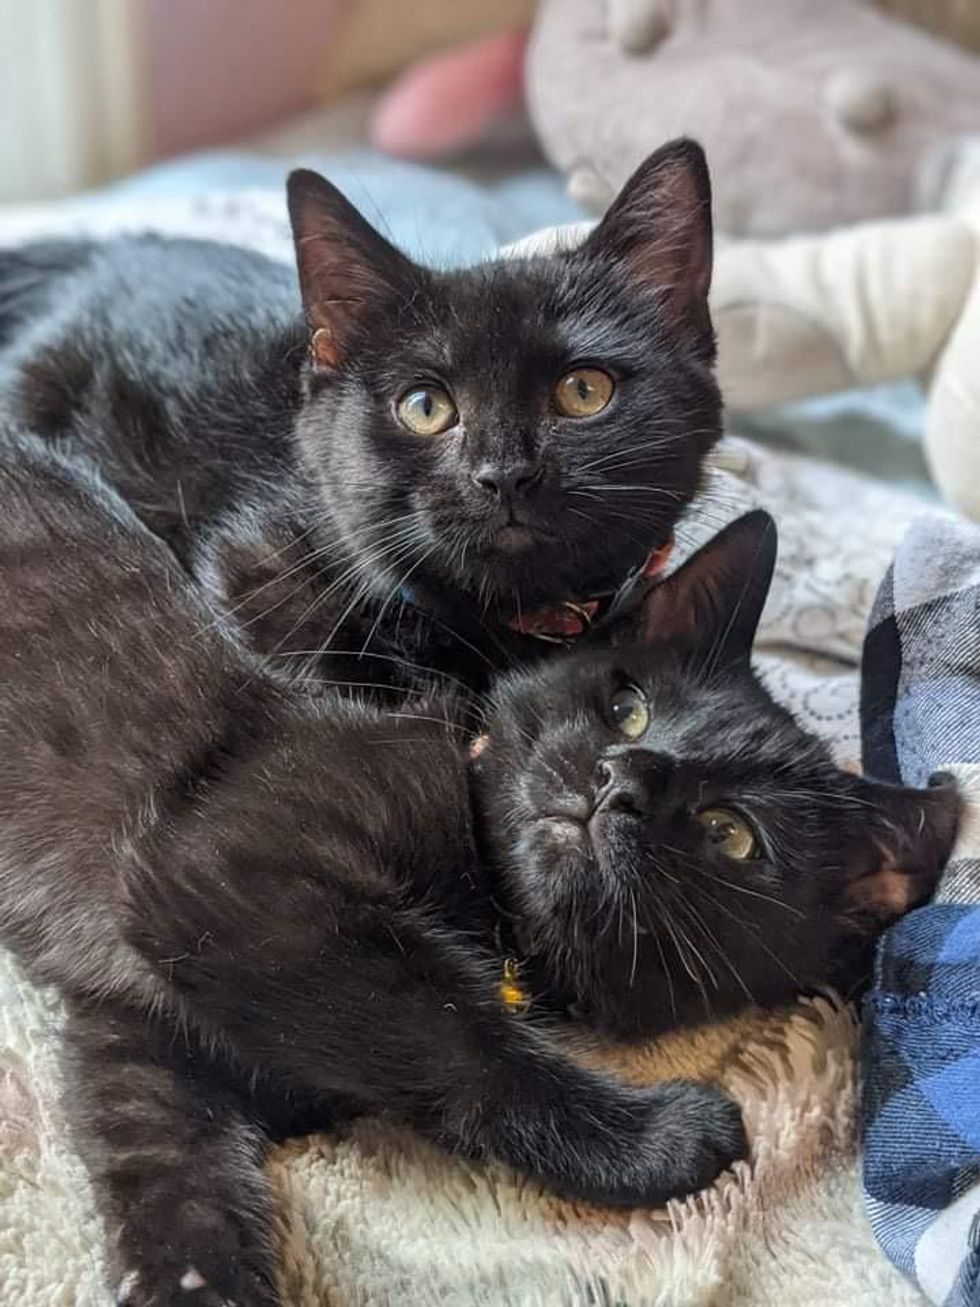 bonded kittens, twin black kittens